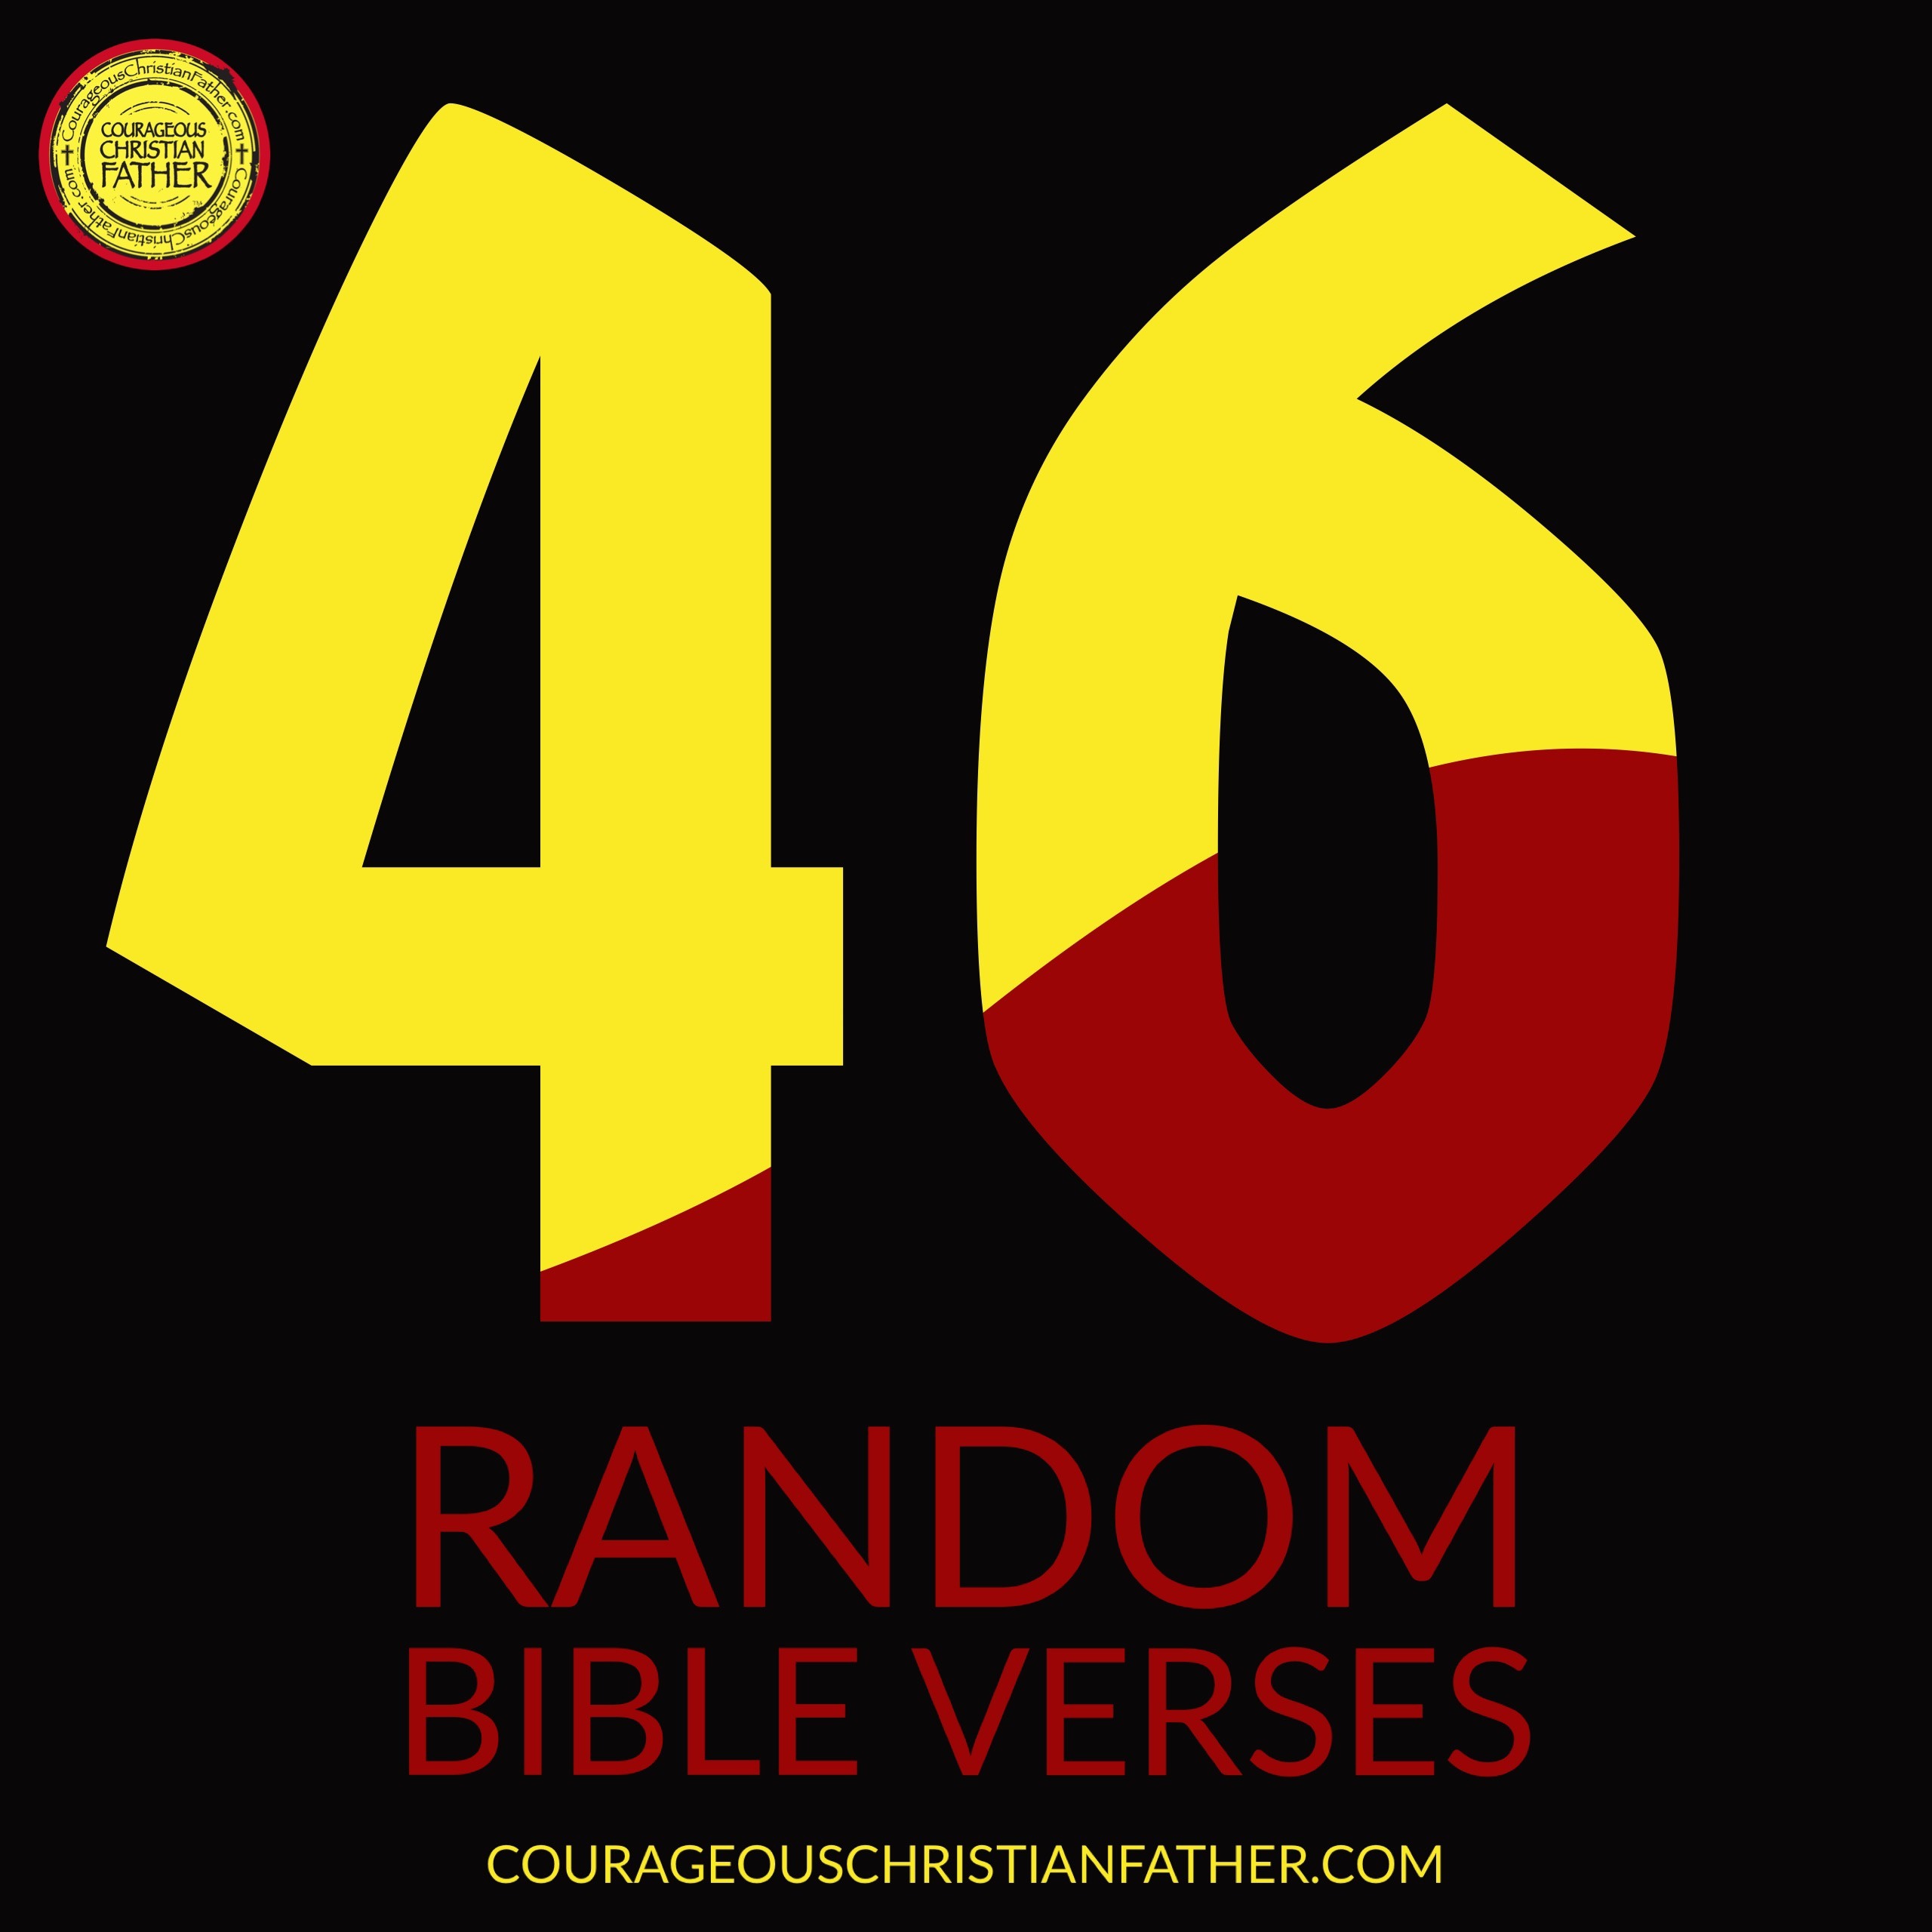 46 Random Bible Verses - this blog post shares 46 random Bible verses. #bibleverses #bgbg2 